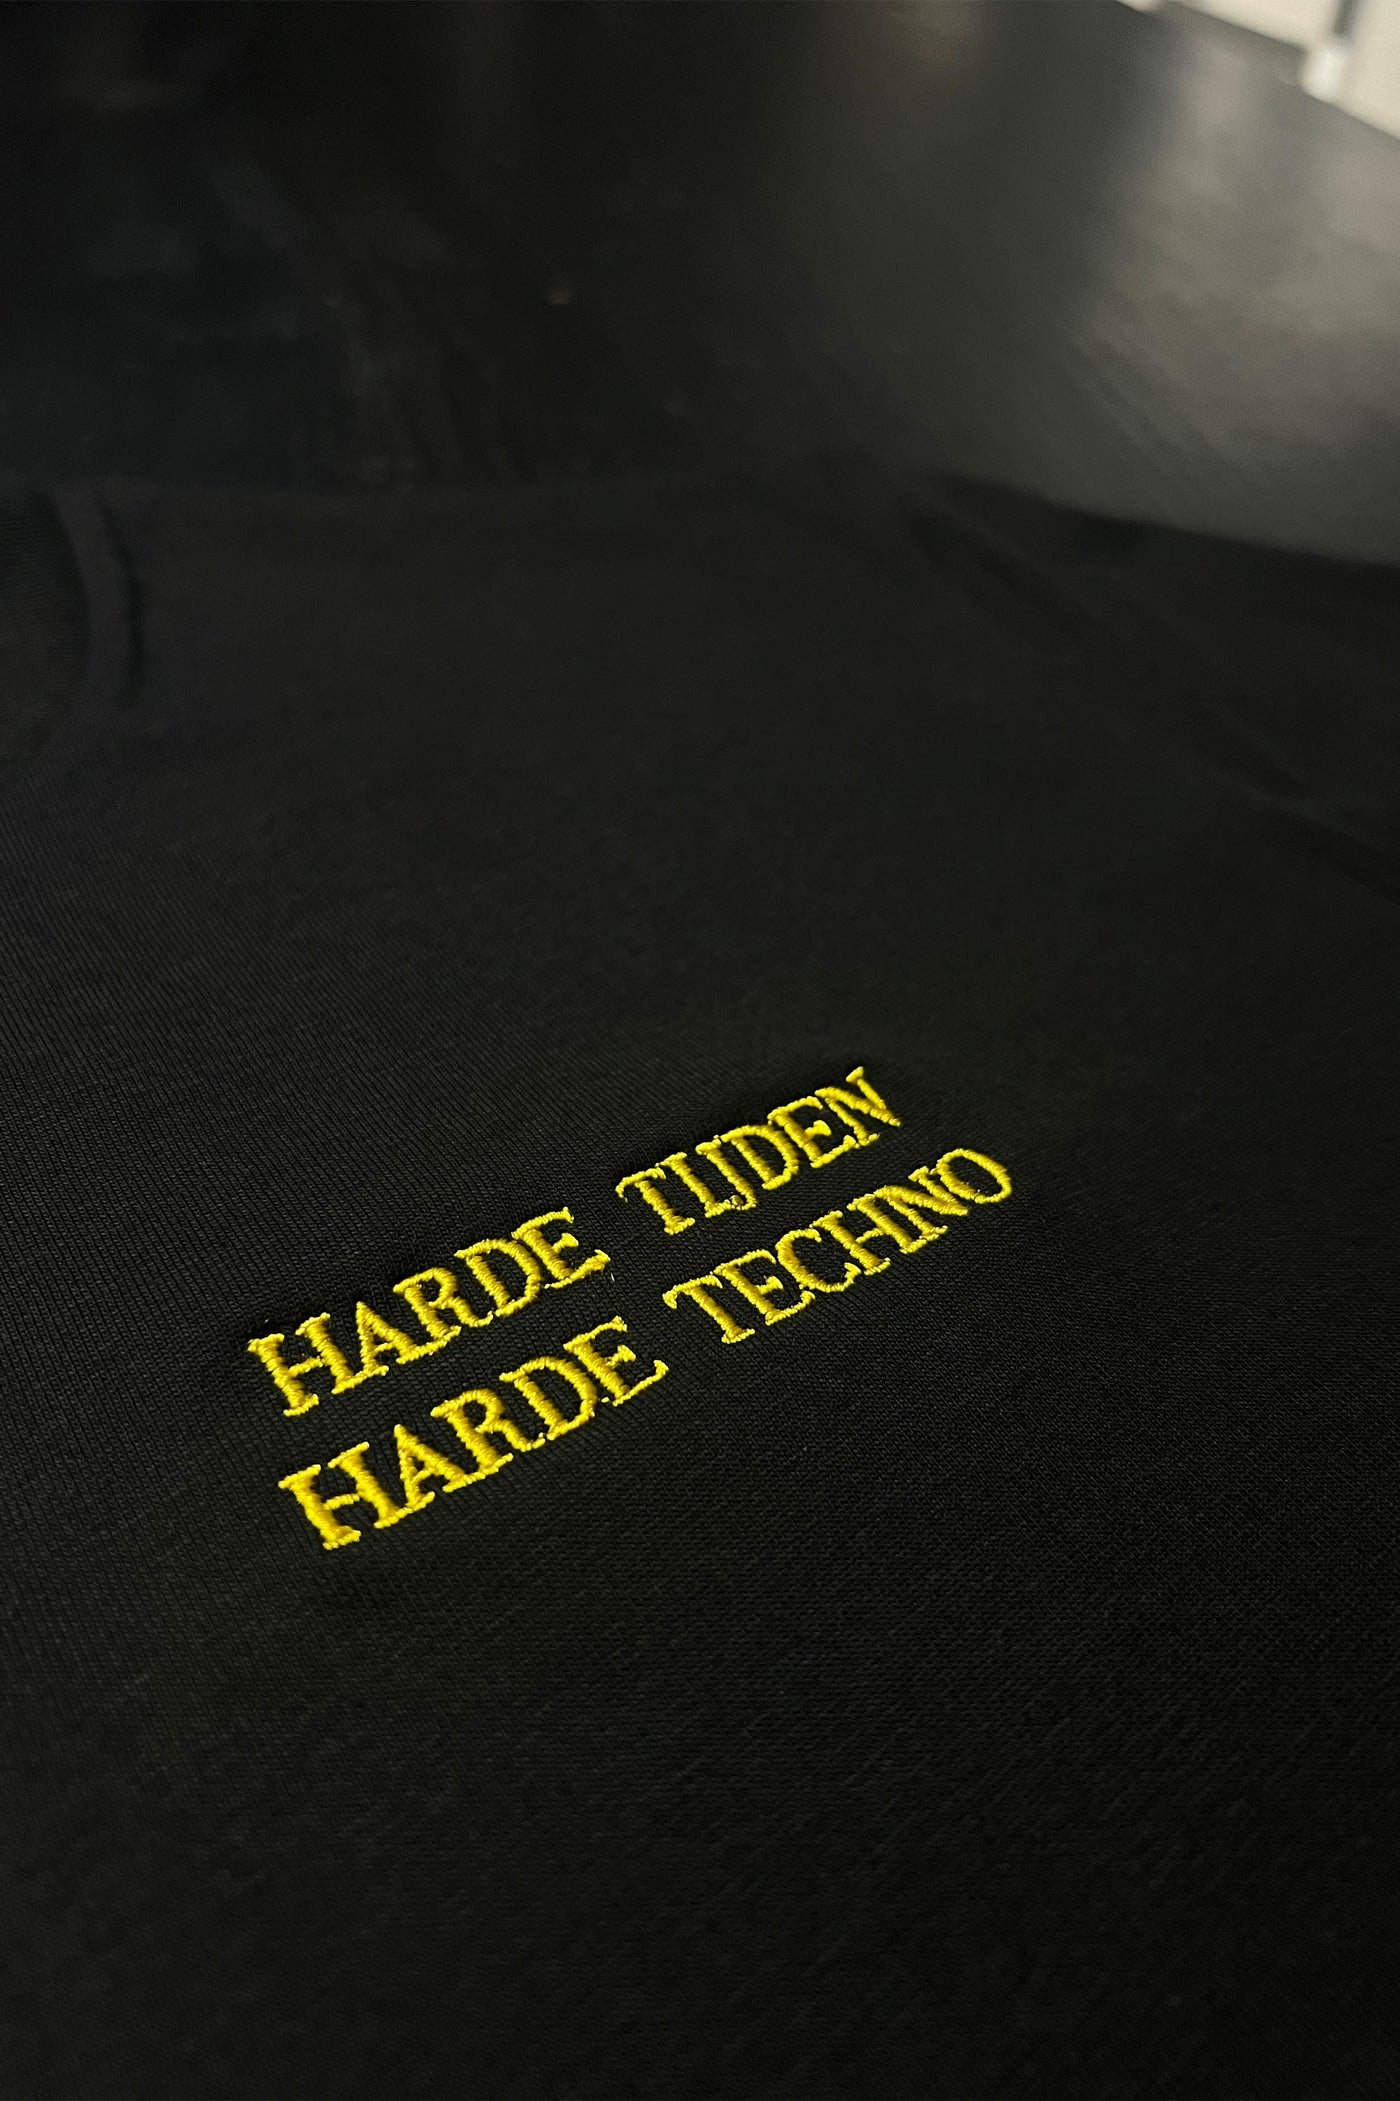 Harde Tijden Harde Techno | T-Shirt